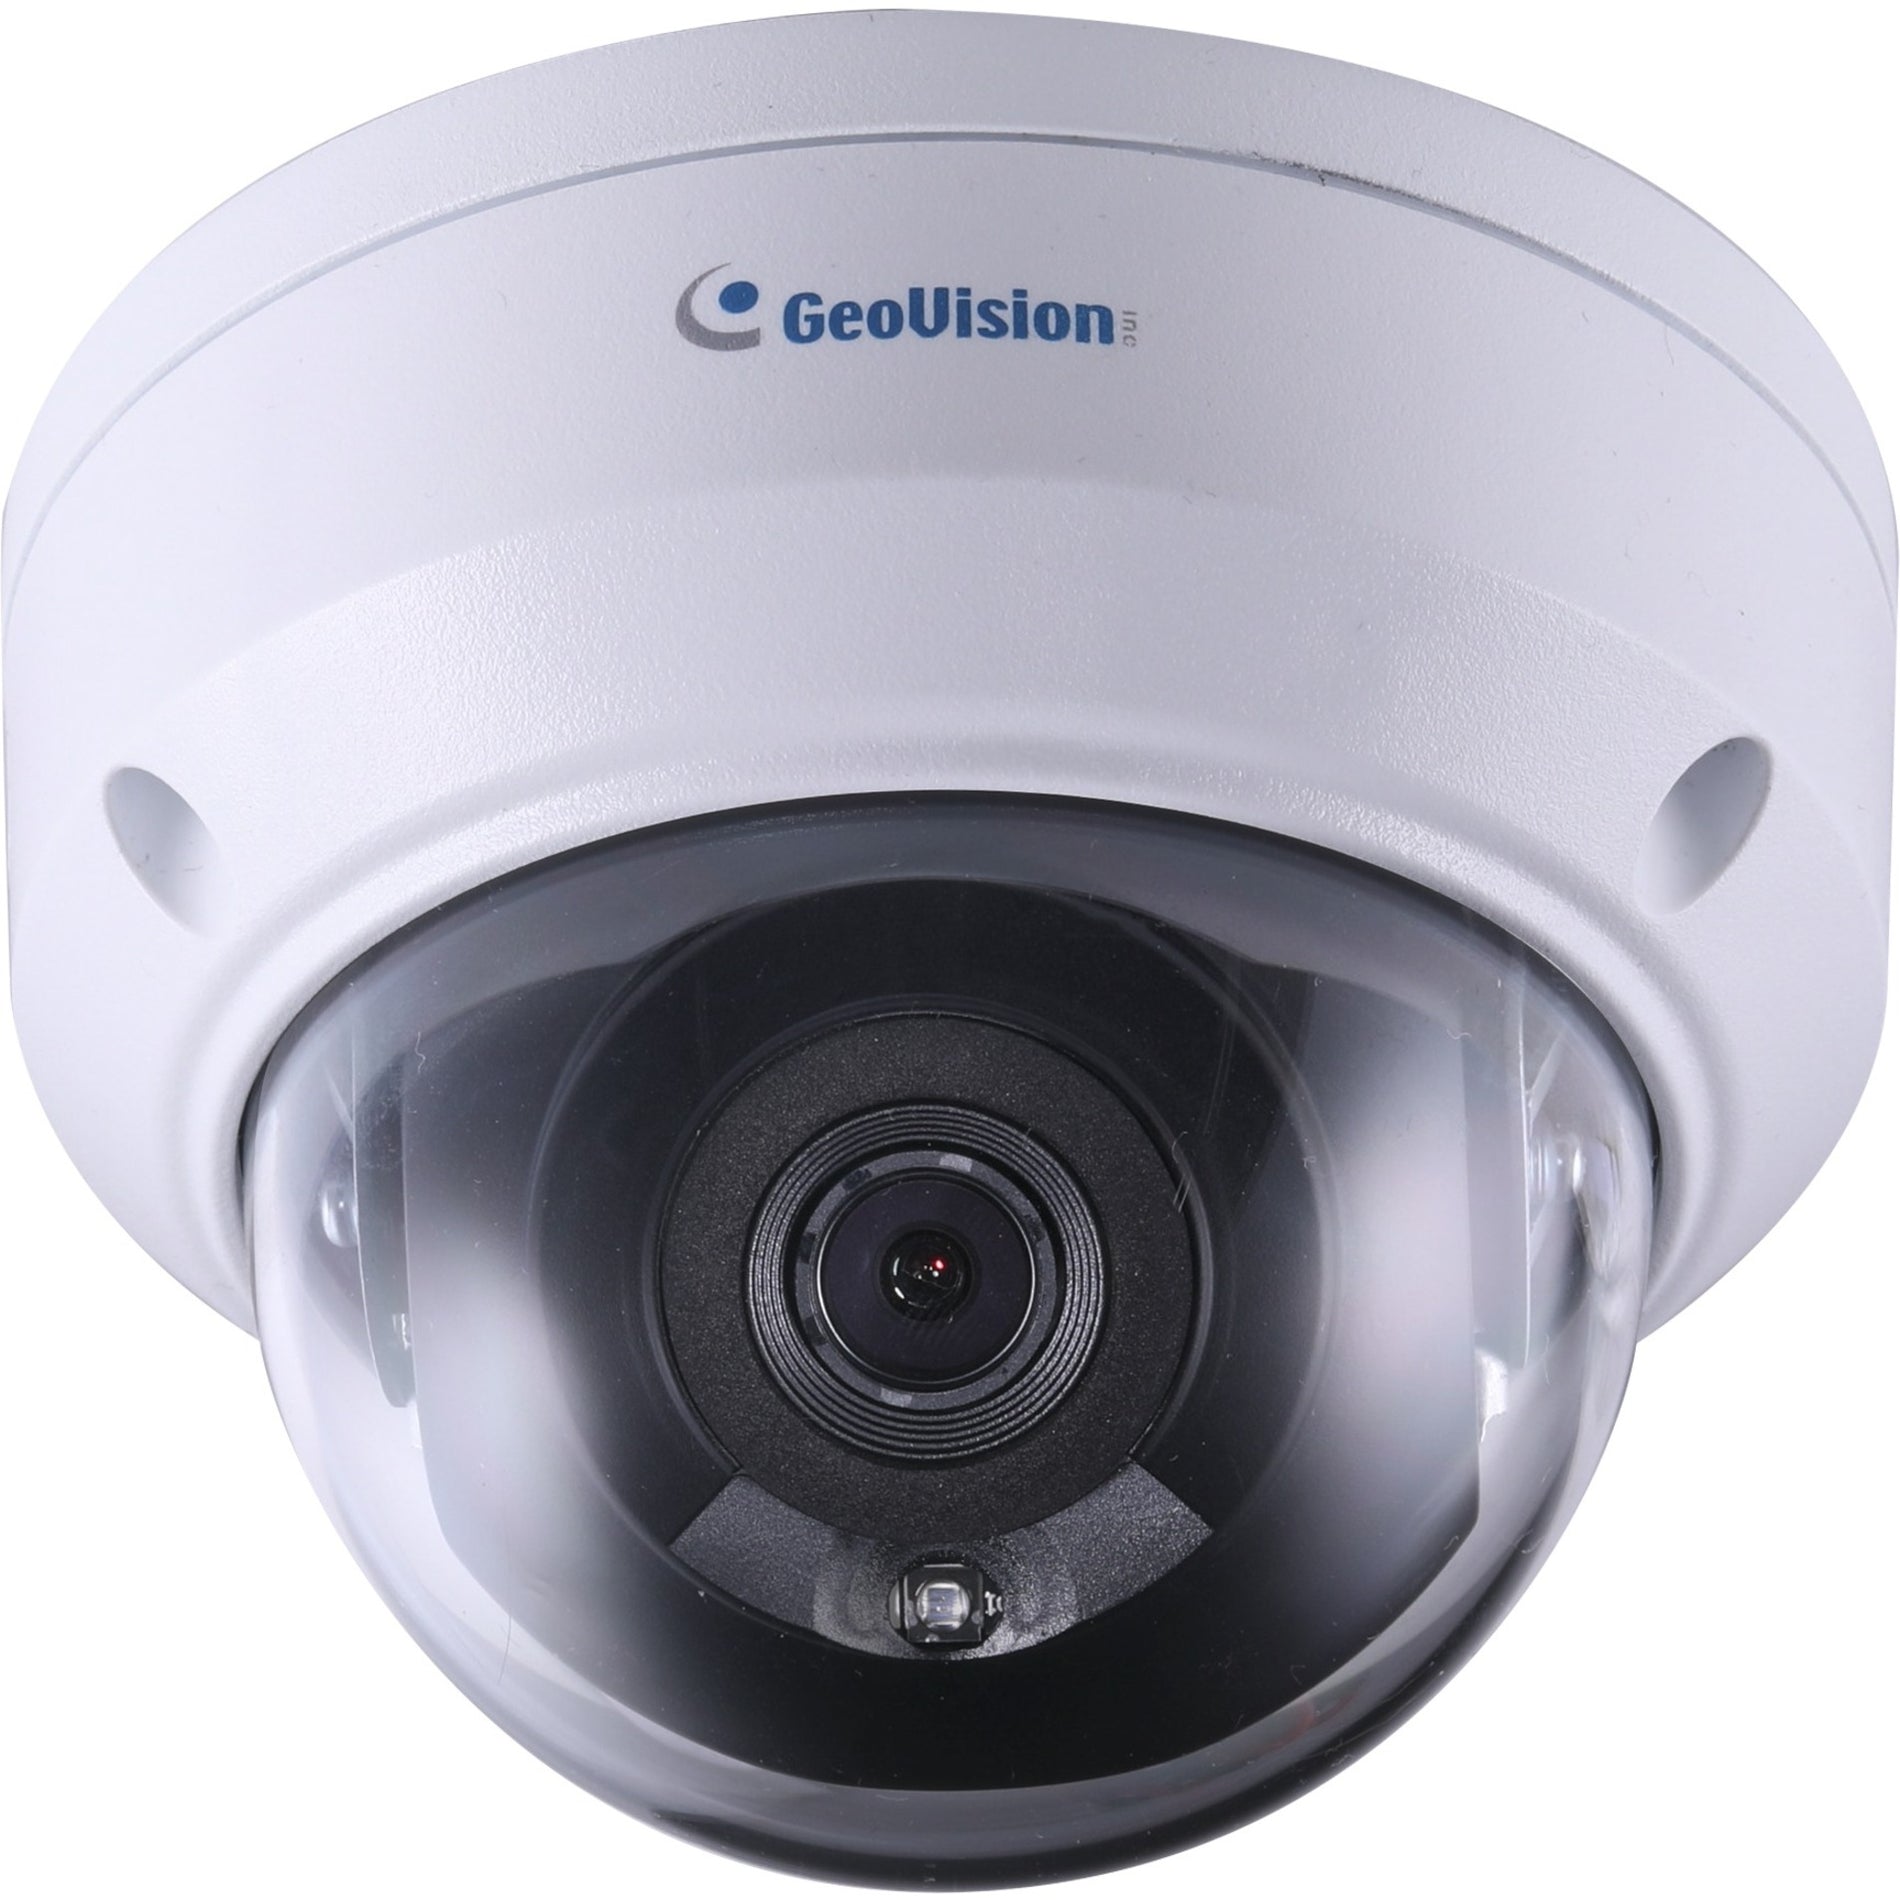 GeoVision GV-TDR4702-0F 4MP HD Network Camera - Mini Dome, H.265, Waterproof, IR Night Vision